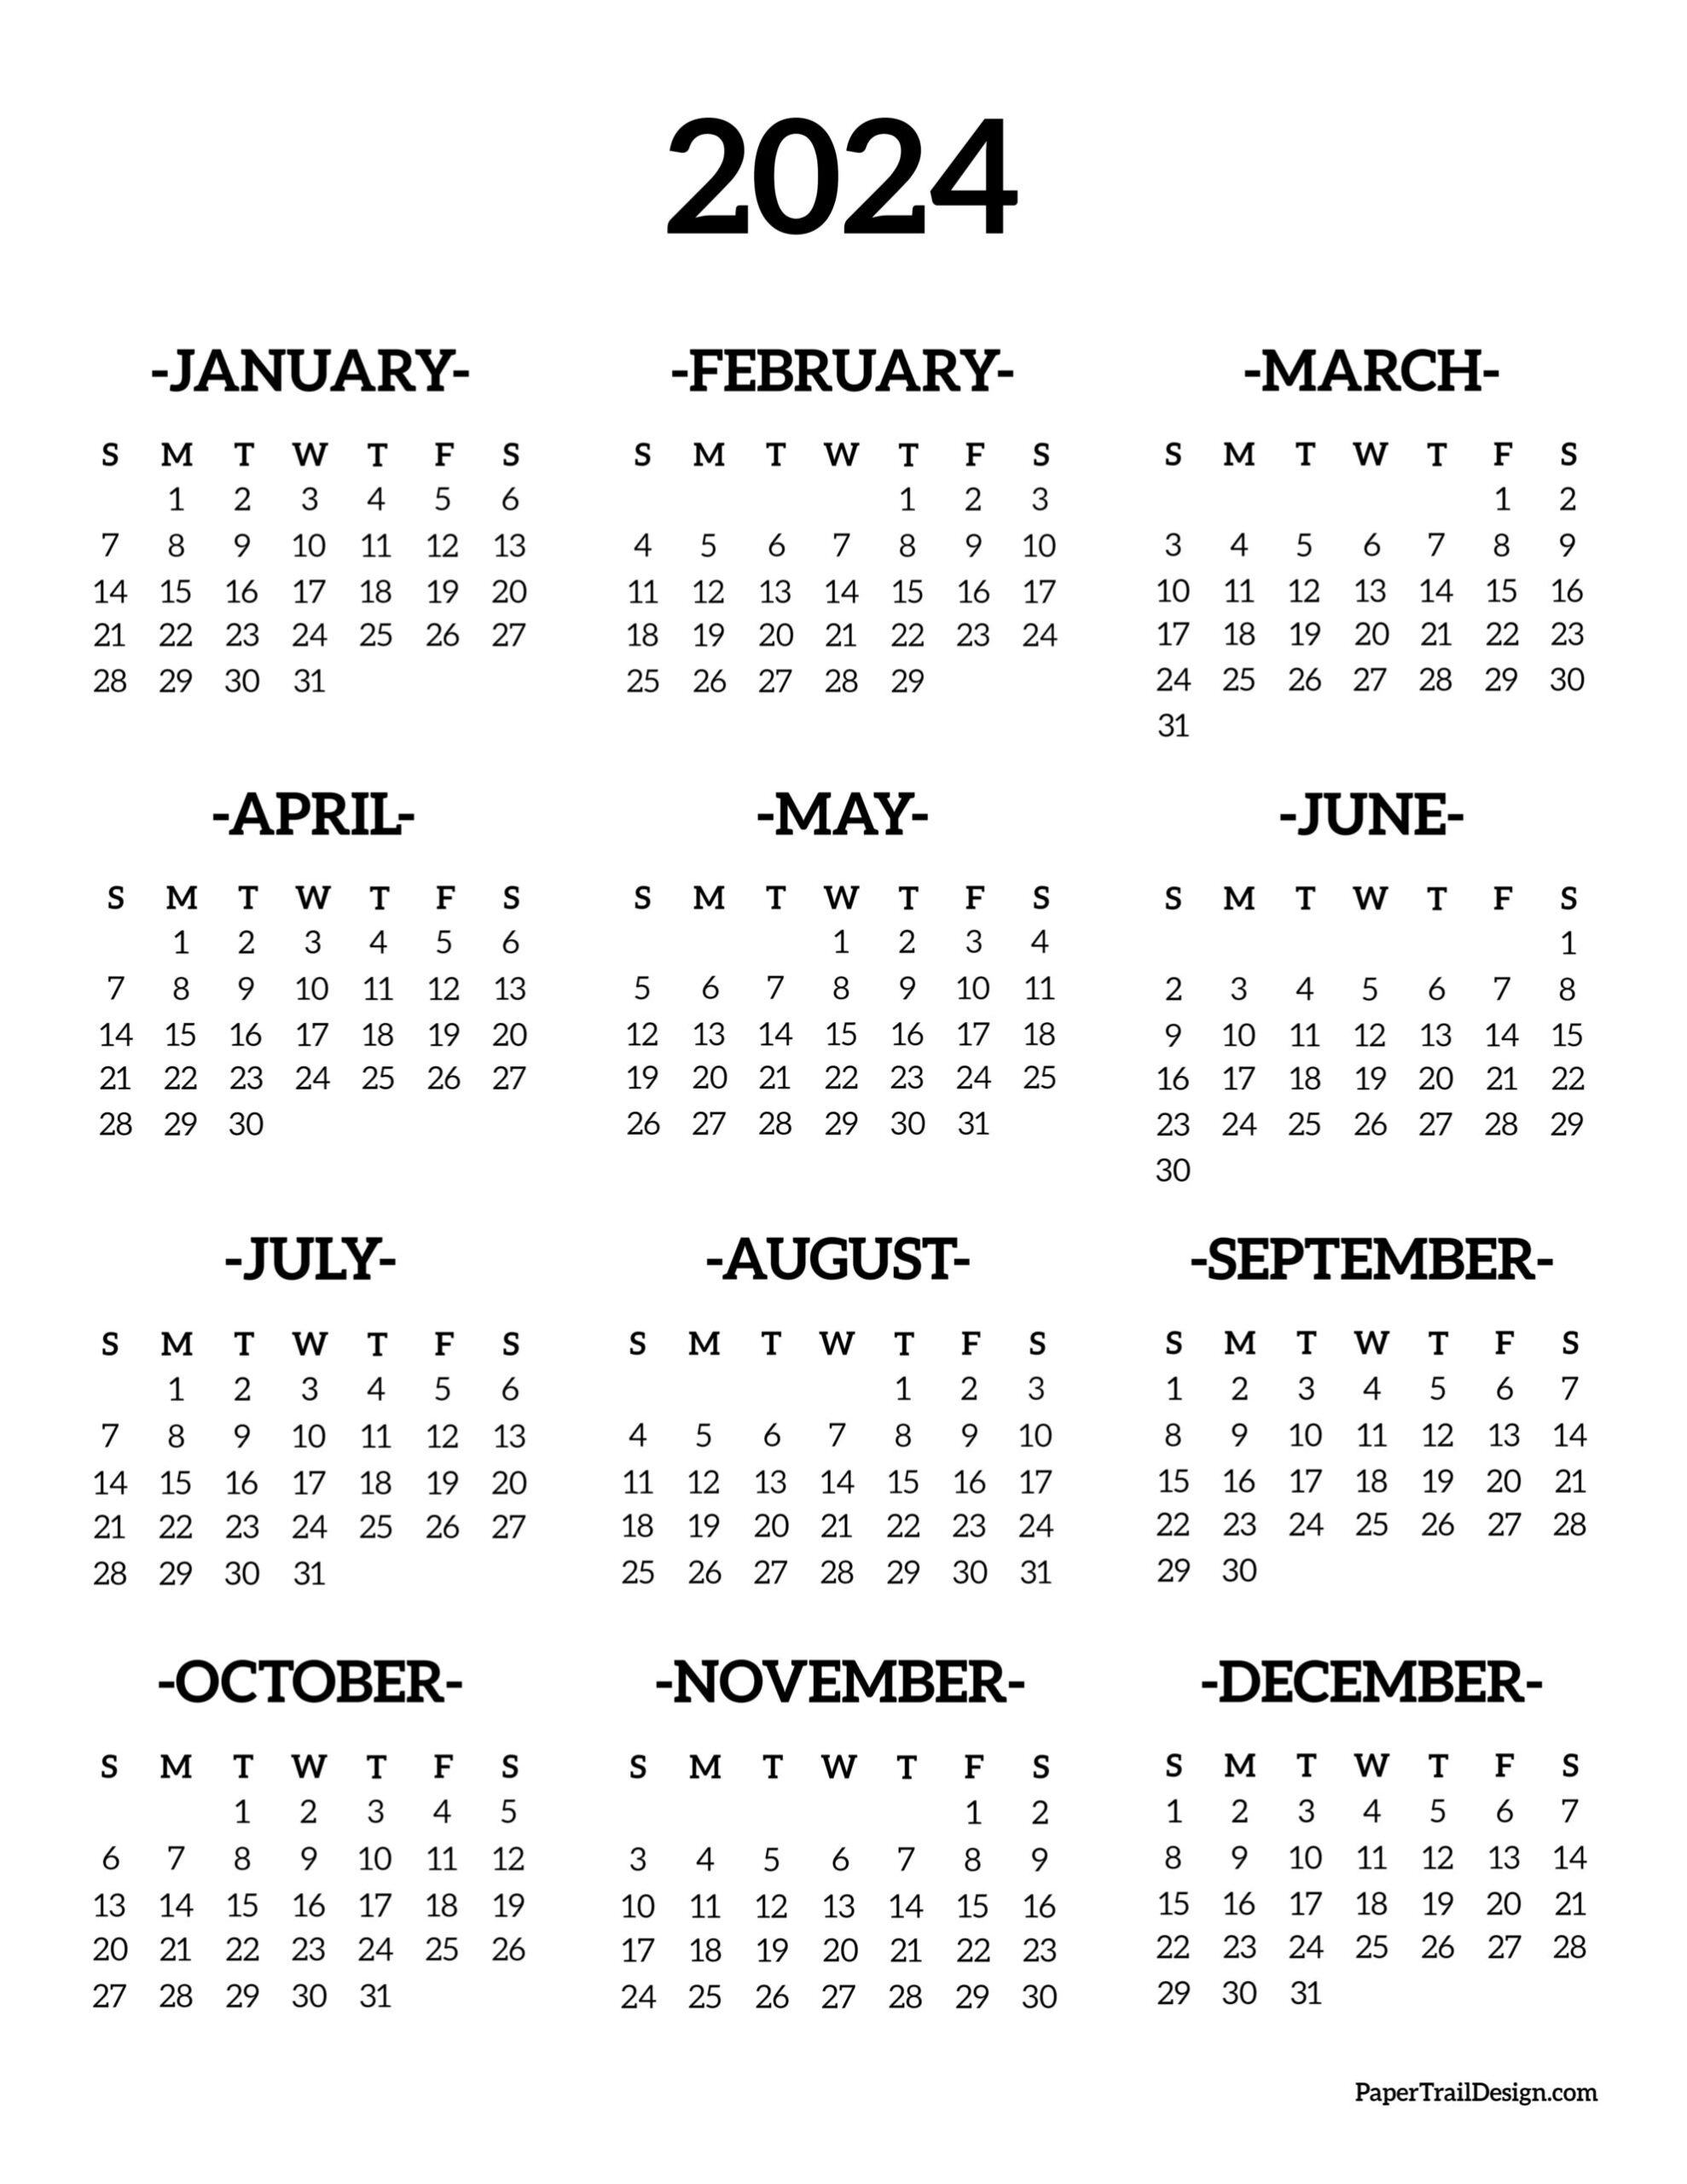 Calendar 2024 Printable One Page - Paper Trail Design | Free Printable 2024 Calendar Year